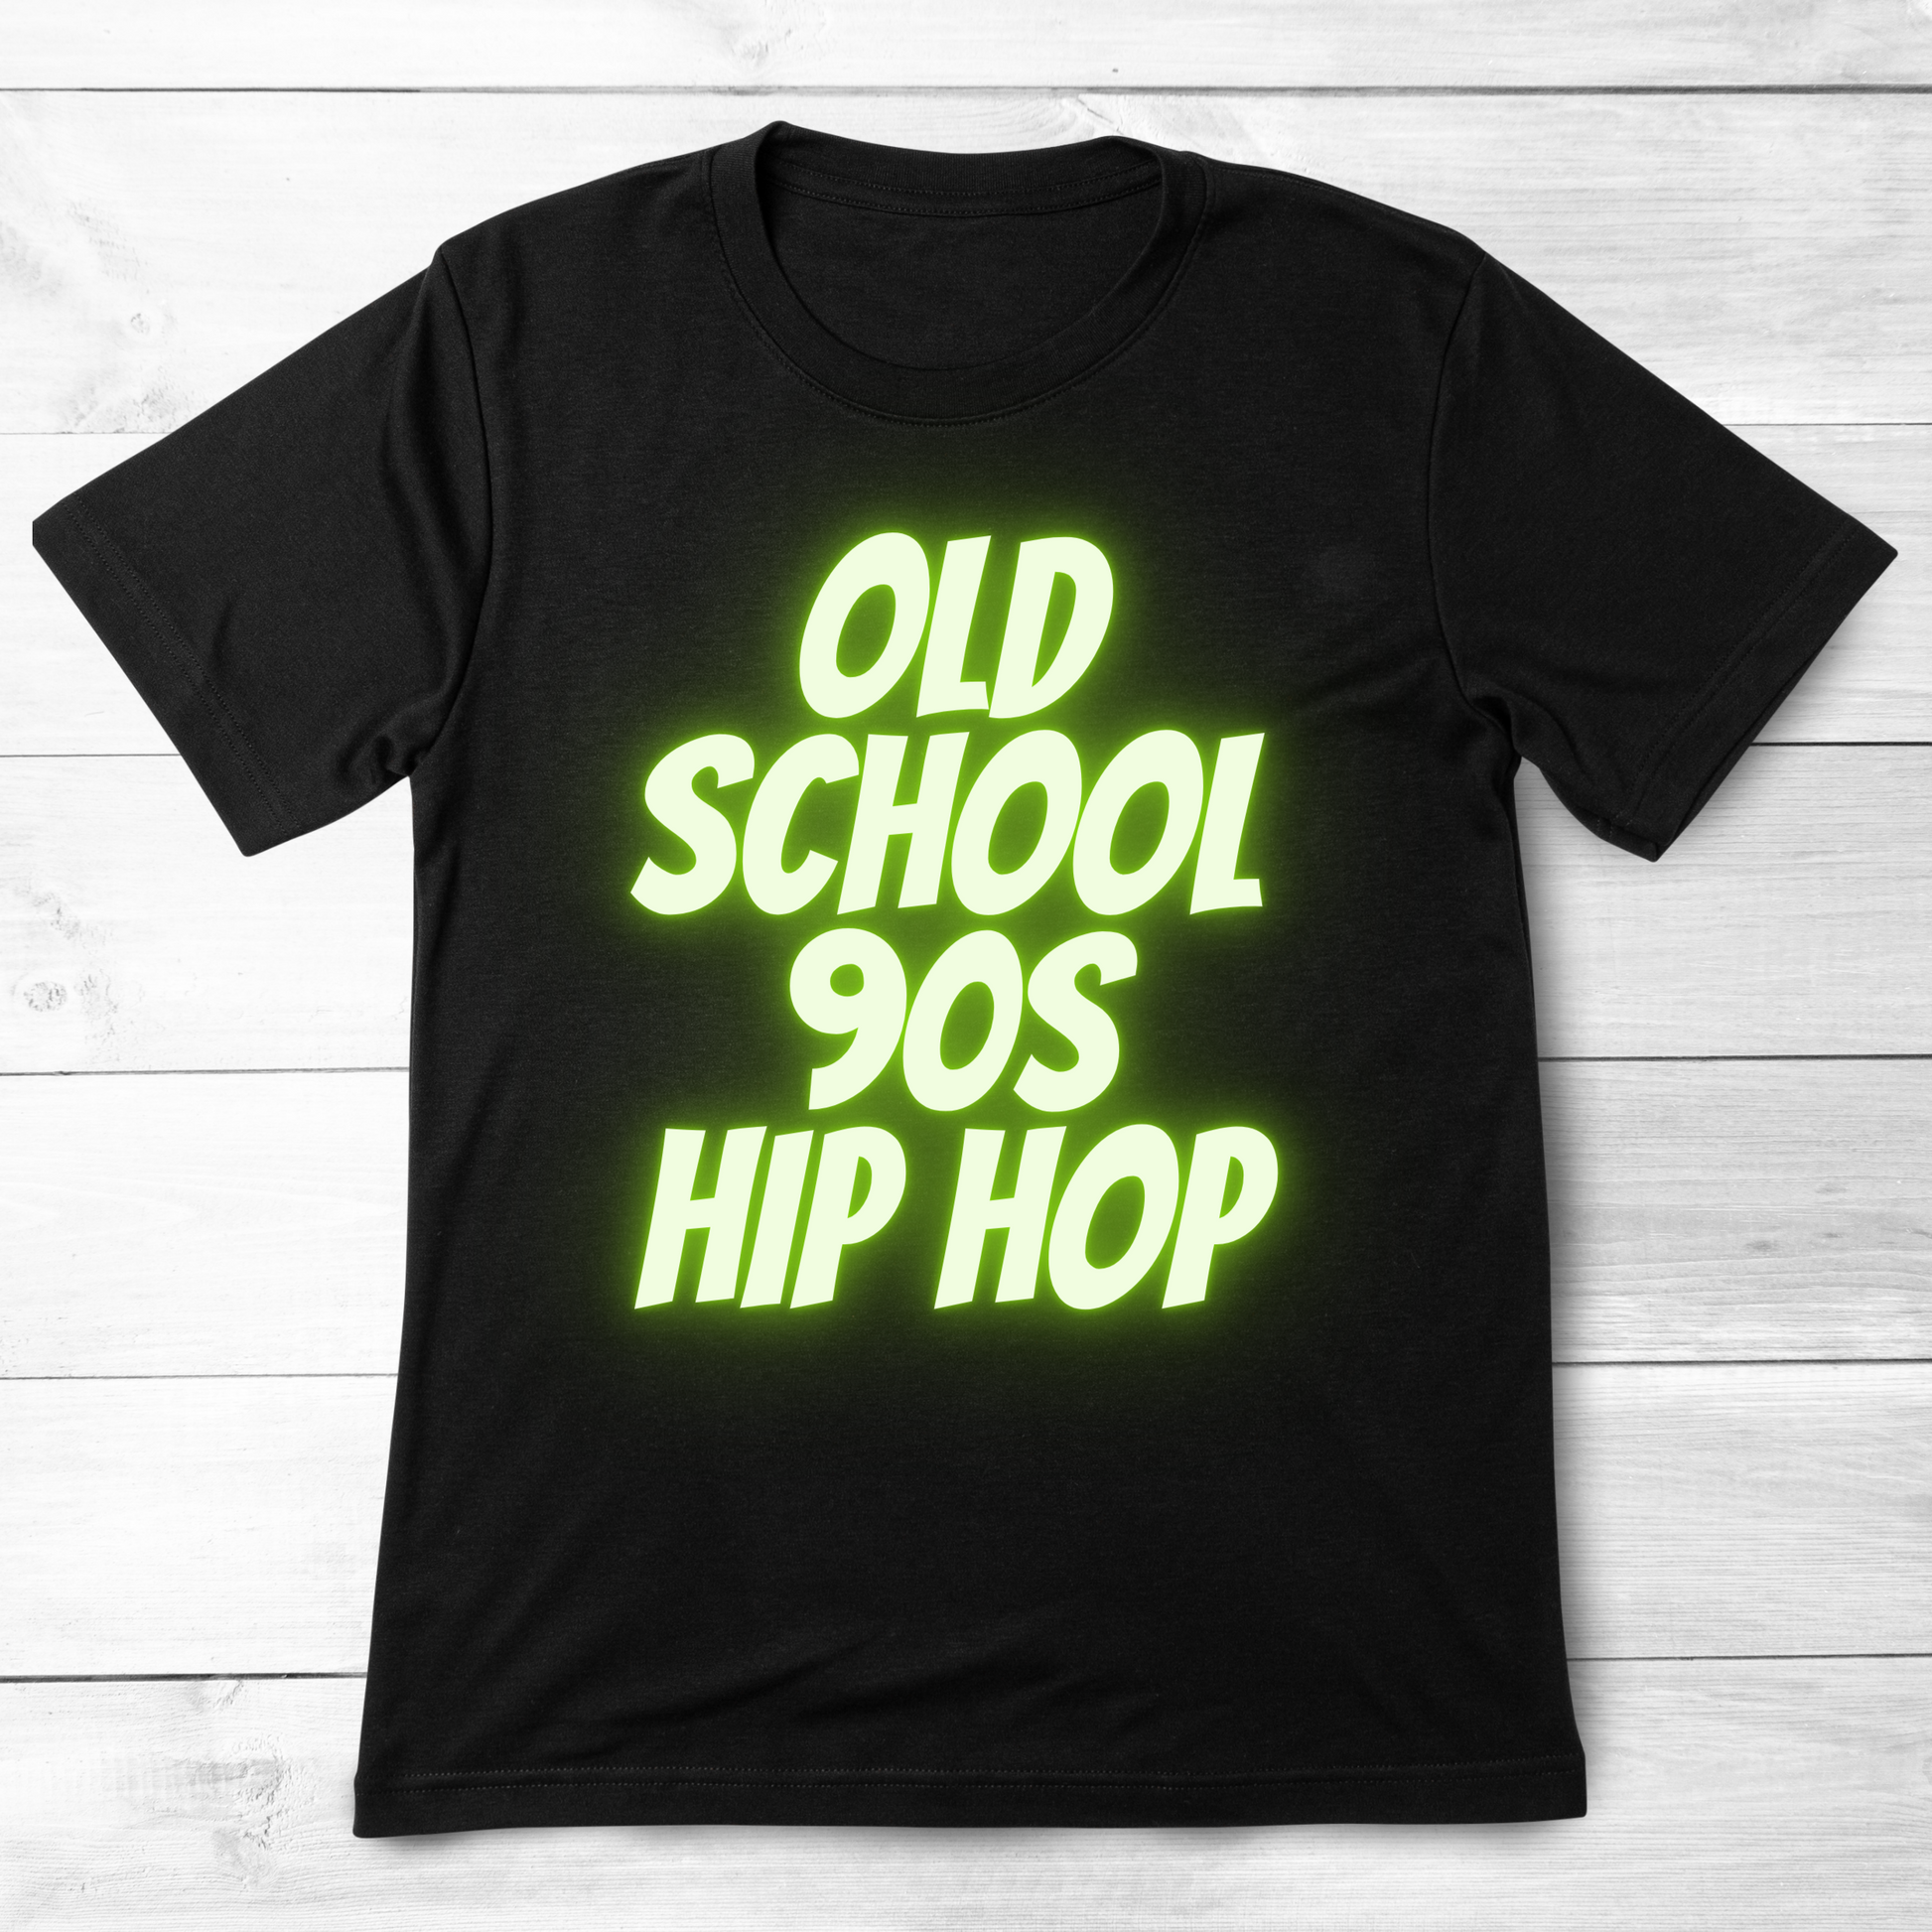 Old School 90s Hip Hop Cassette Shirt - Premium t-shirt from Lees Krazy Teez - Shop now at Lees Krazy Teez